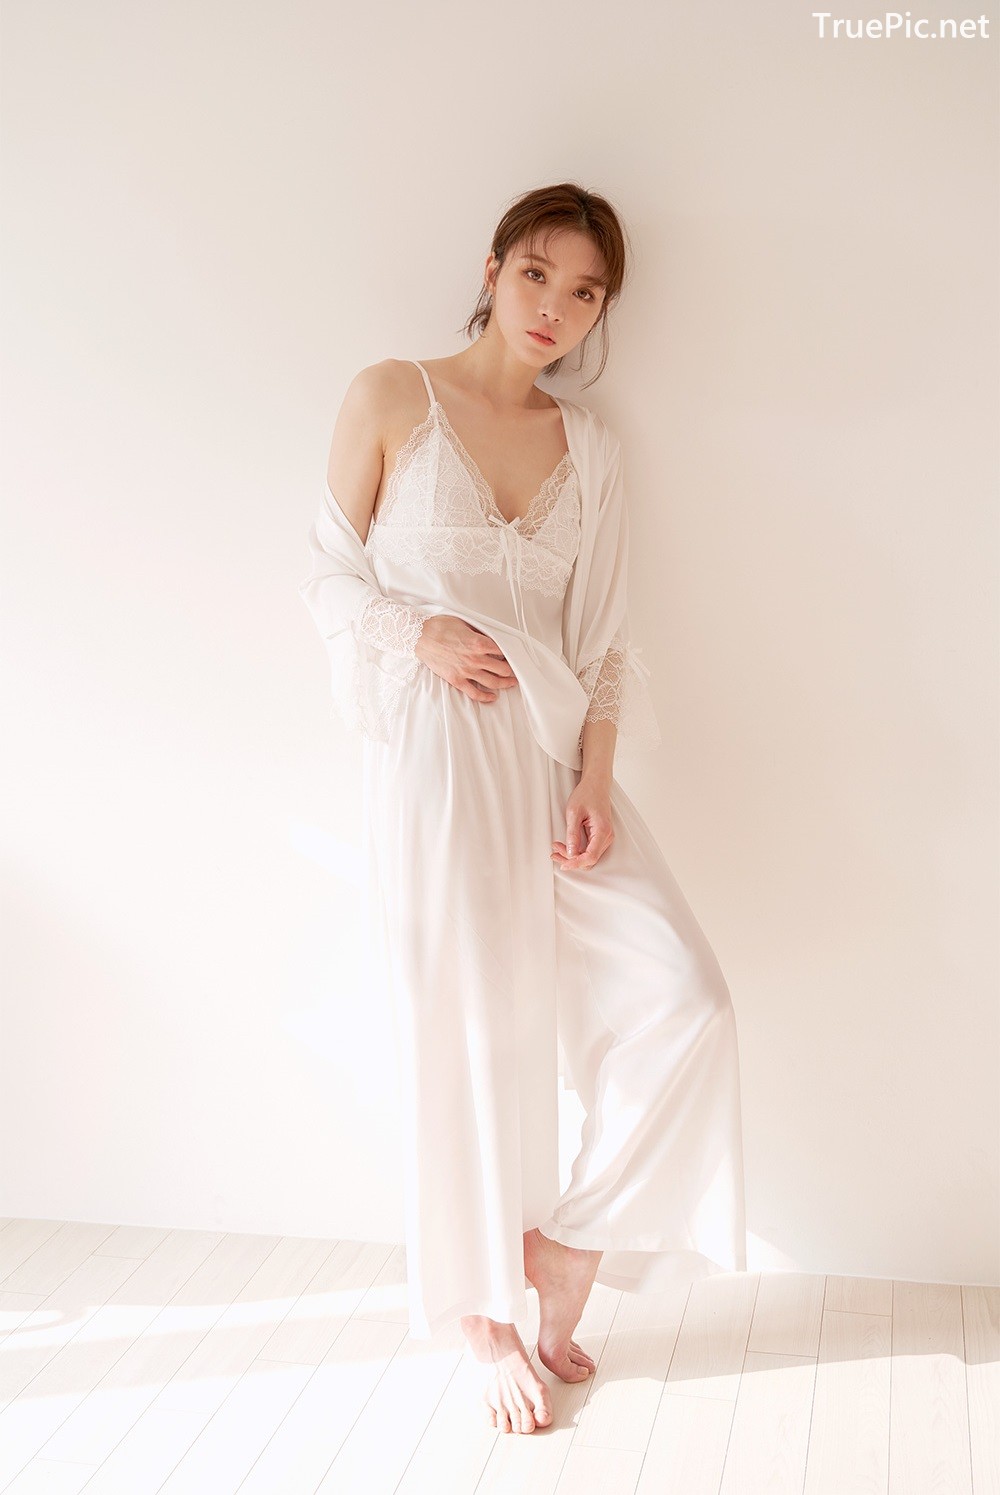 Image Korean Fashion Model Lee Ho Sin - Lingerie Wedding Pure - TruePic.net - Picture-115